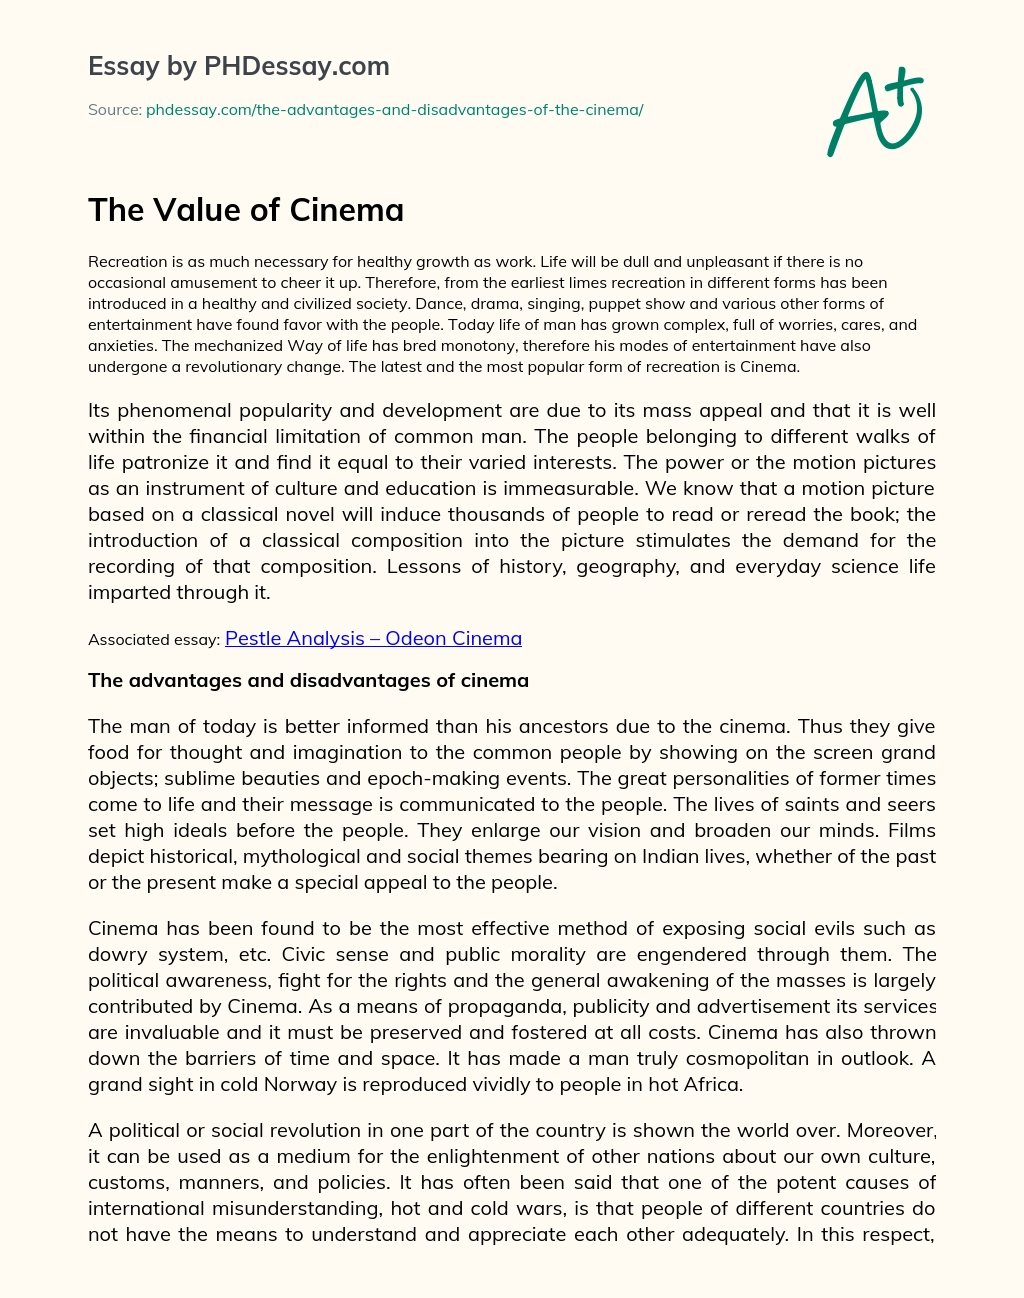 The Value of Cinema essay